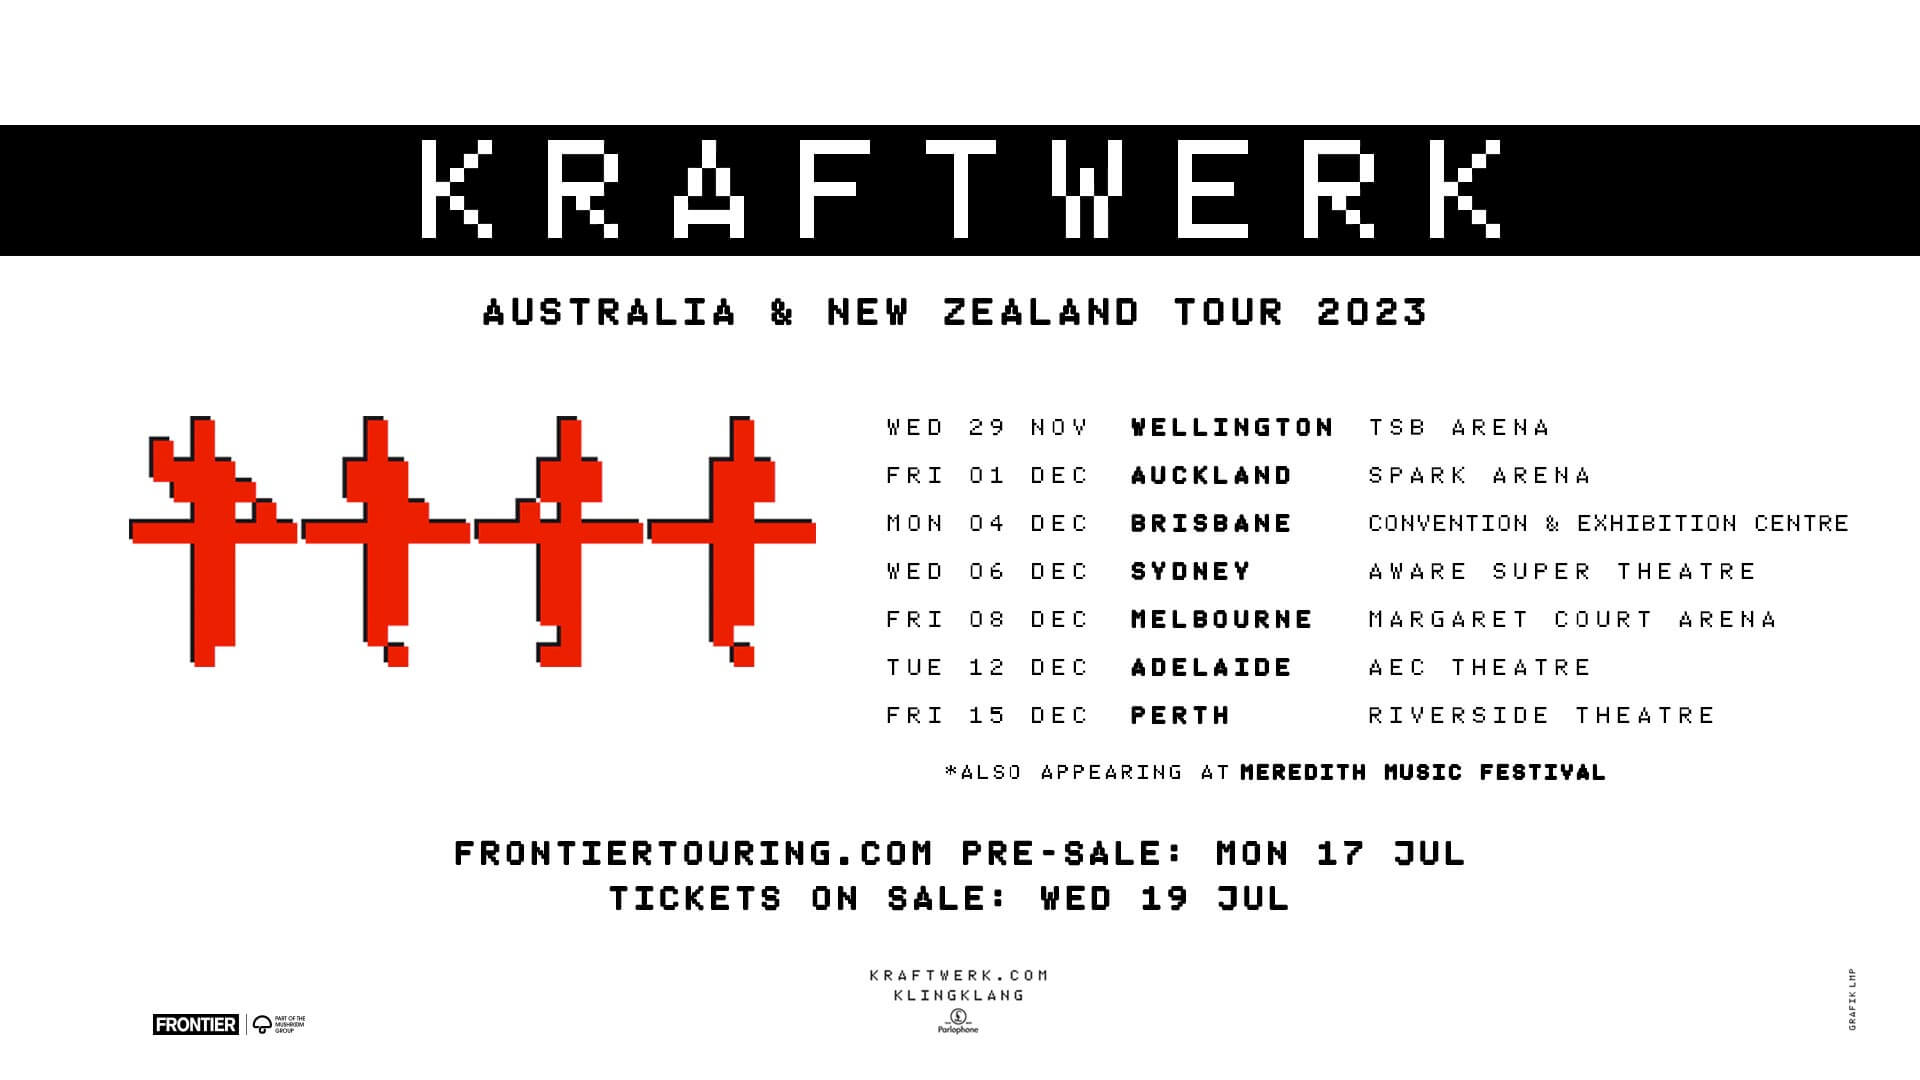 kraftwerk-australia-new-zealand-tour-2023-poster